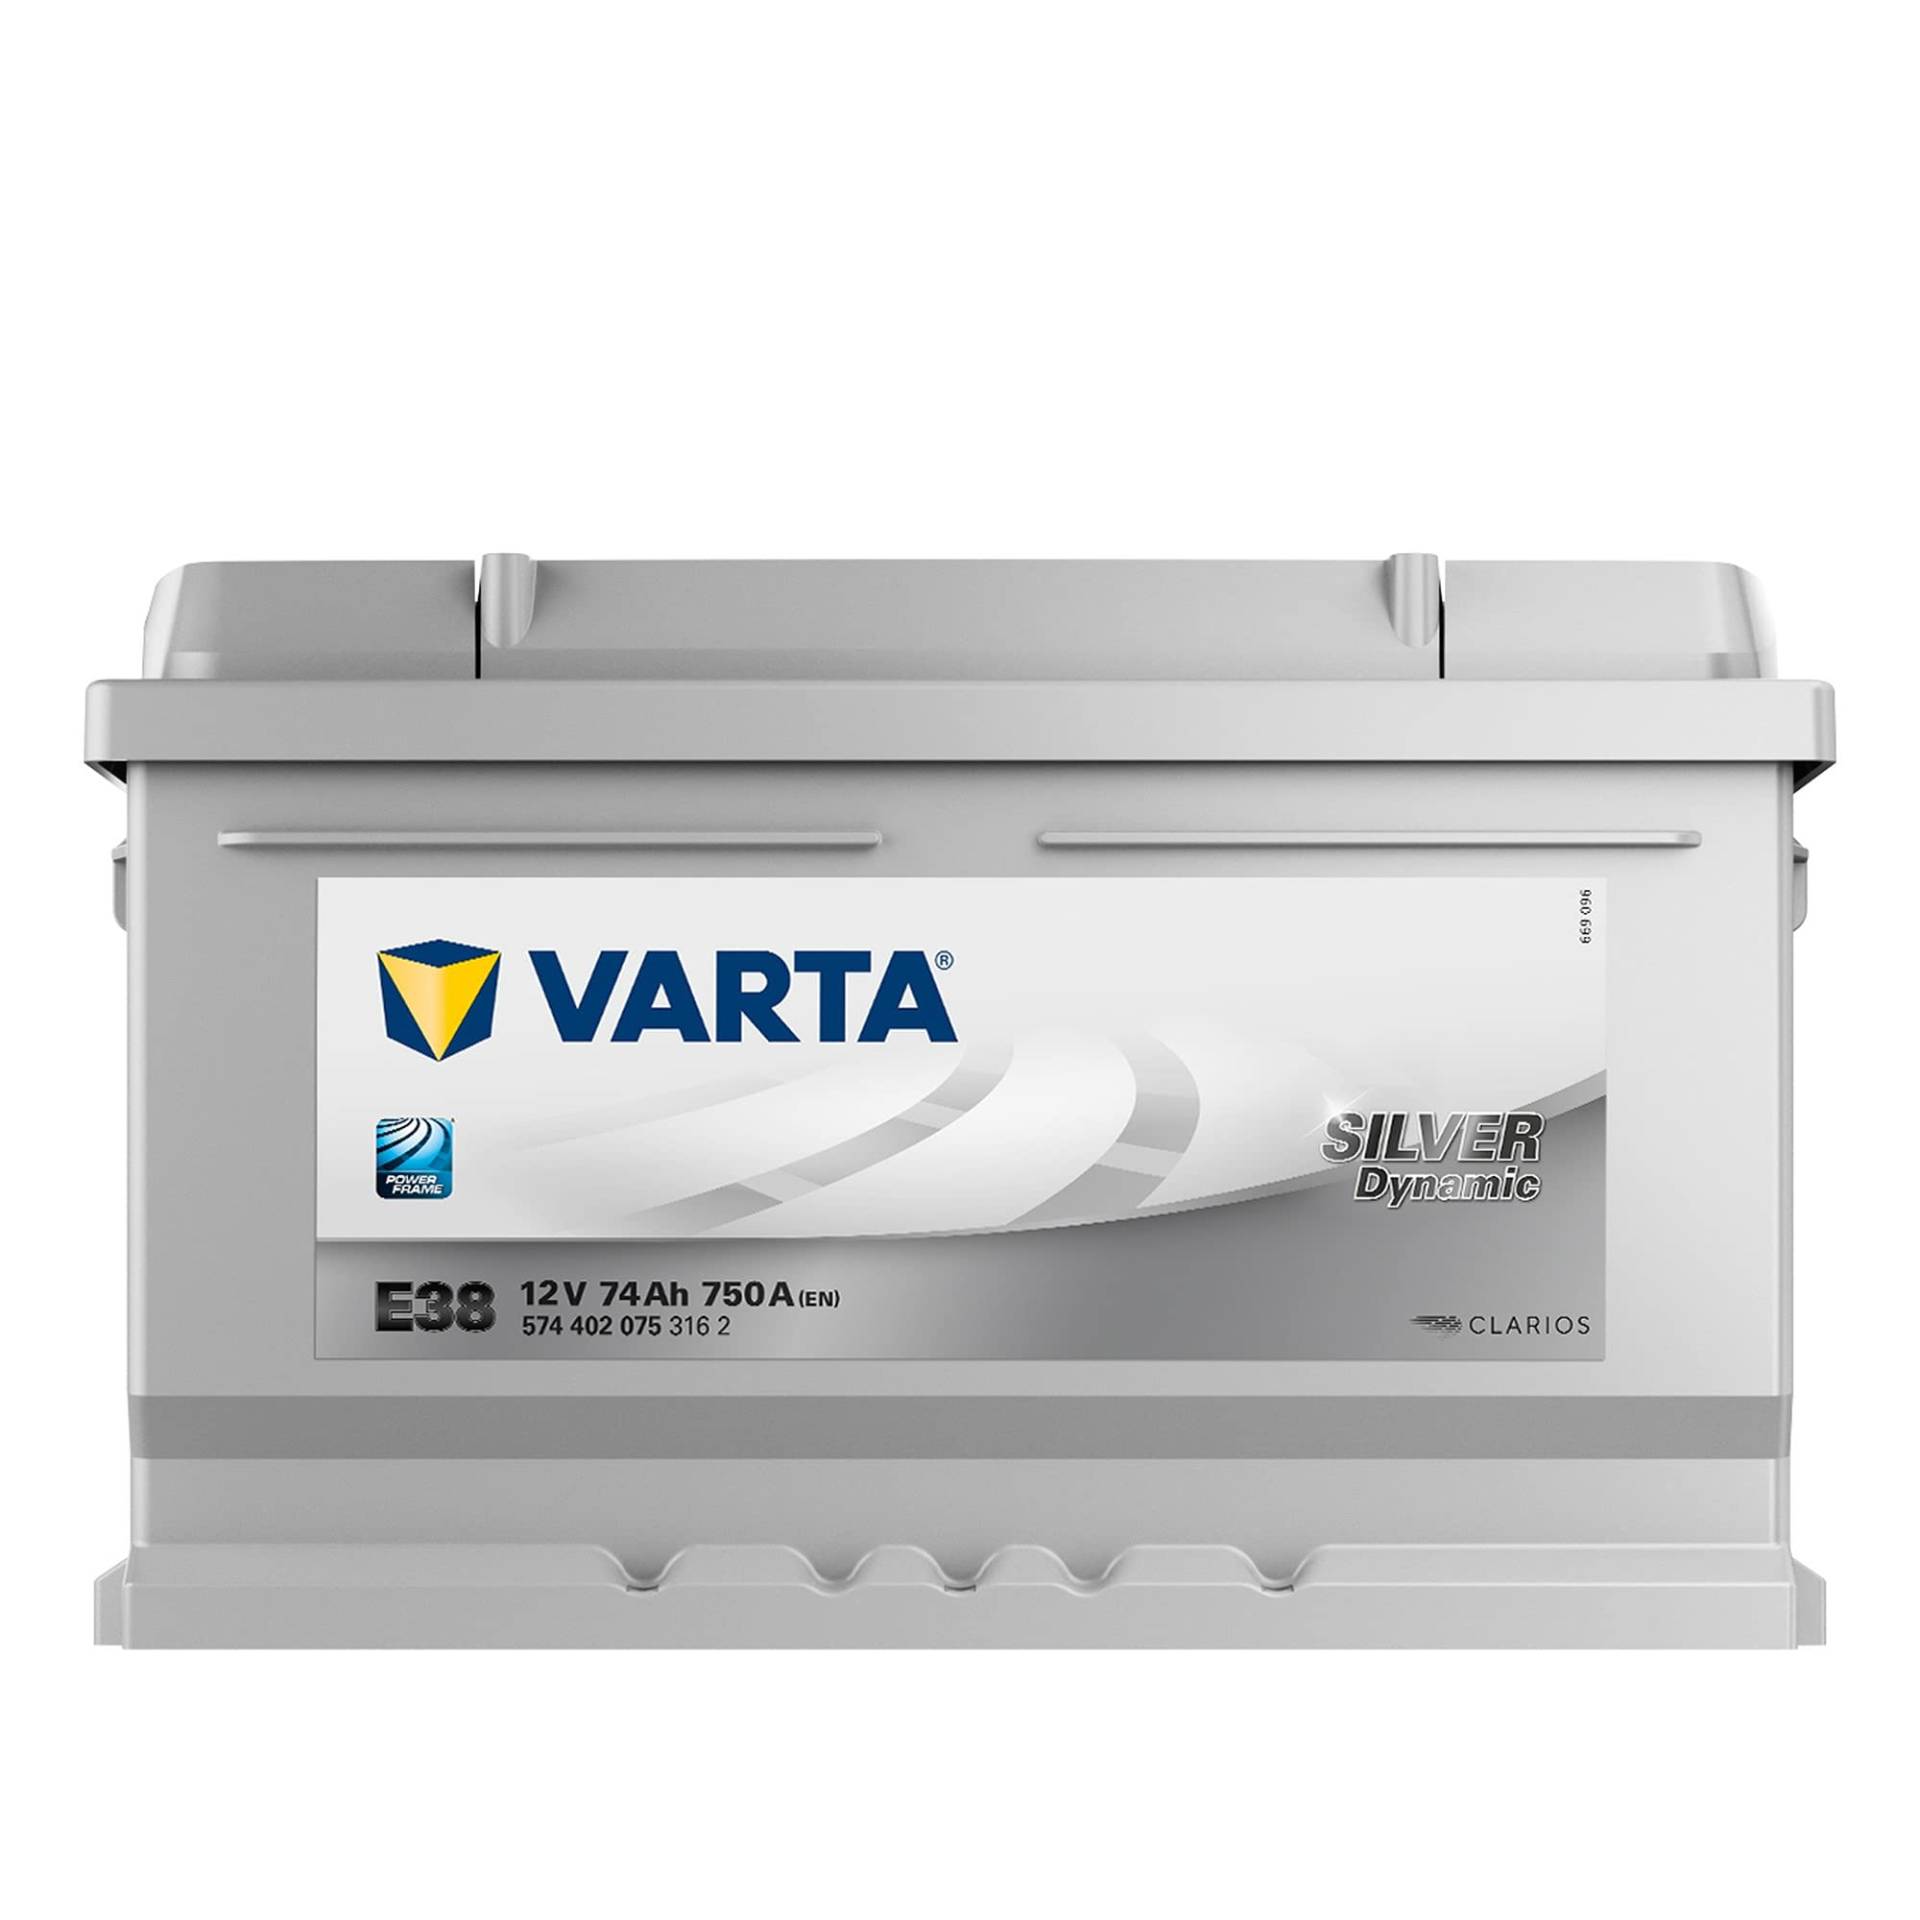 VARTA Silver Dynamic E38 Autobatterie 12V 74Ah 750A von Varta